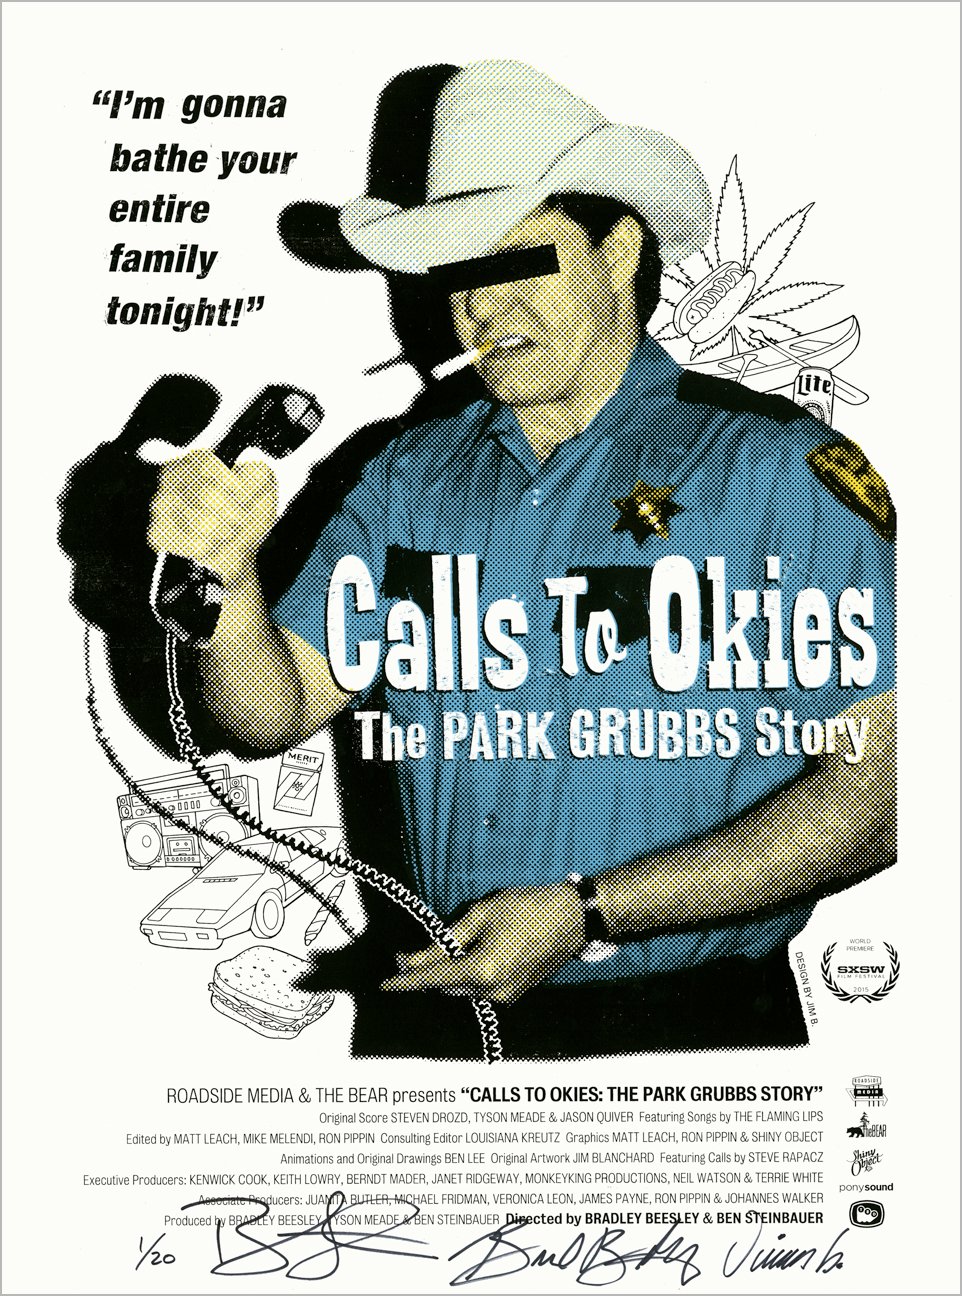 Image of CALLS TO OKIES silkscreen print